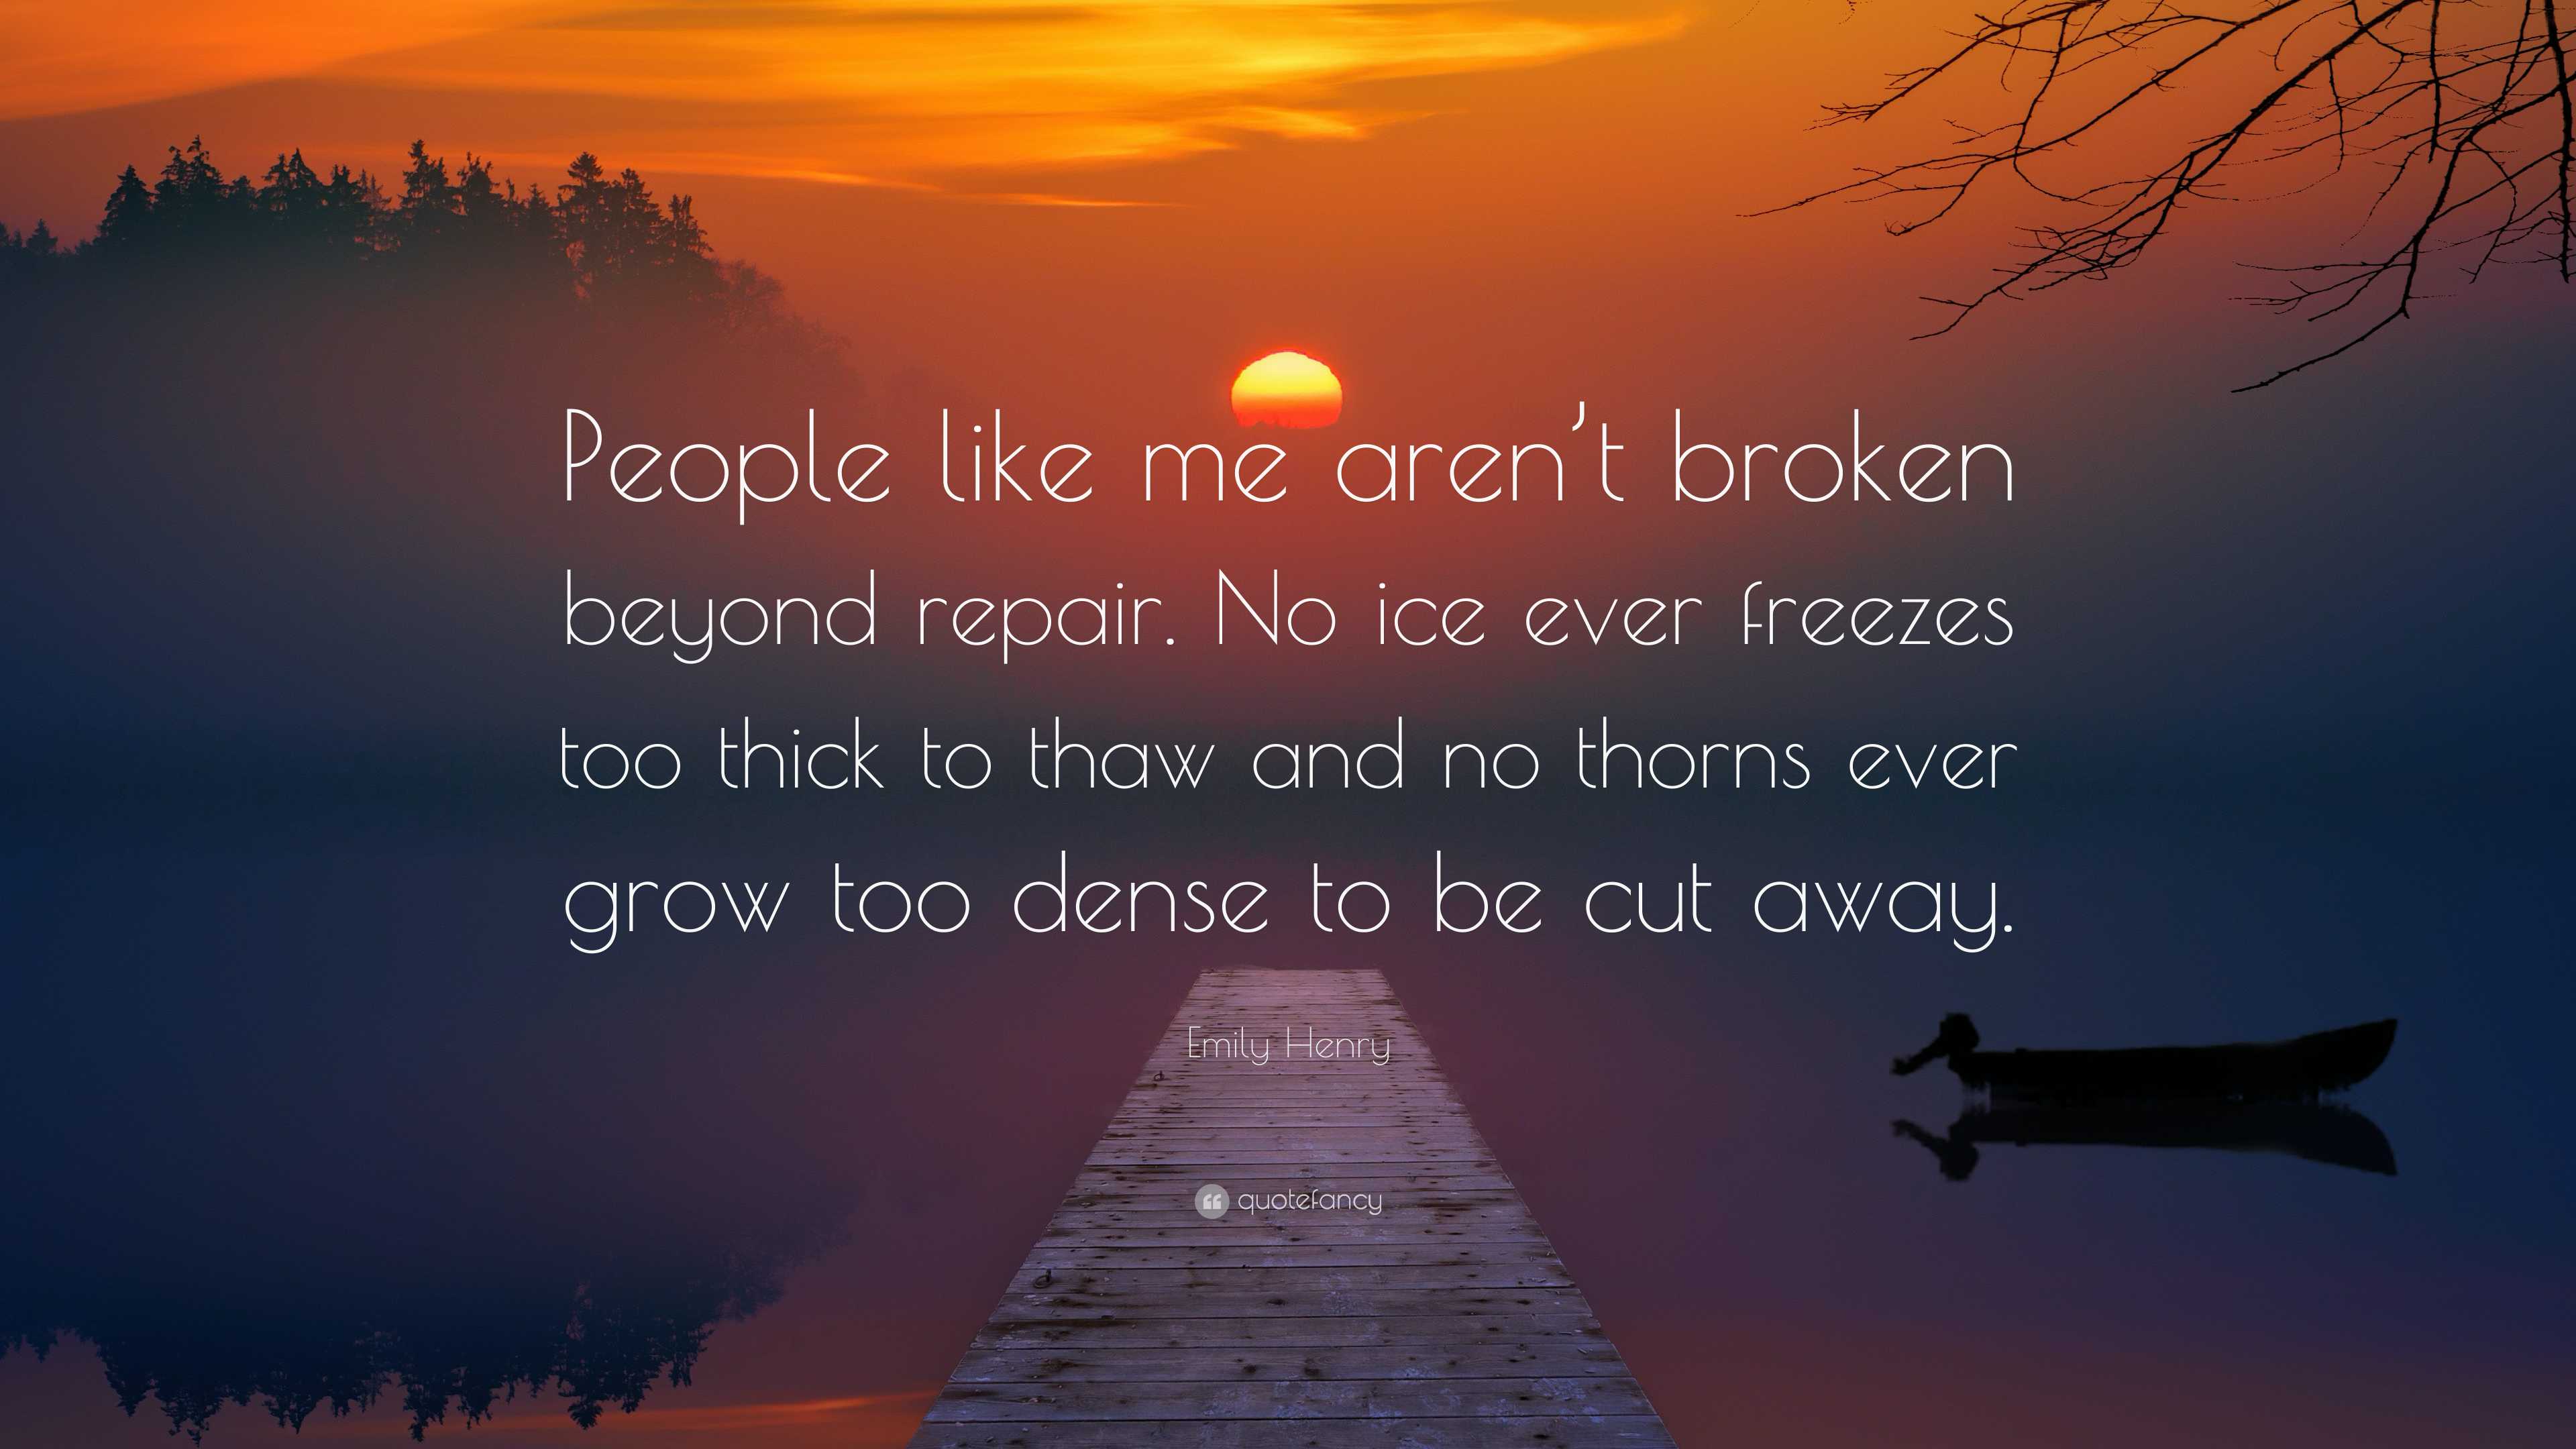 Emily Henry Quote: “People like me aren’t broken beyond repair. No ice ...